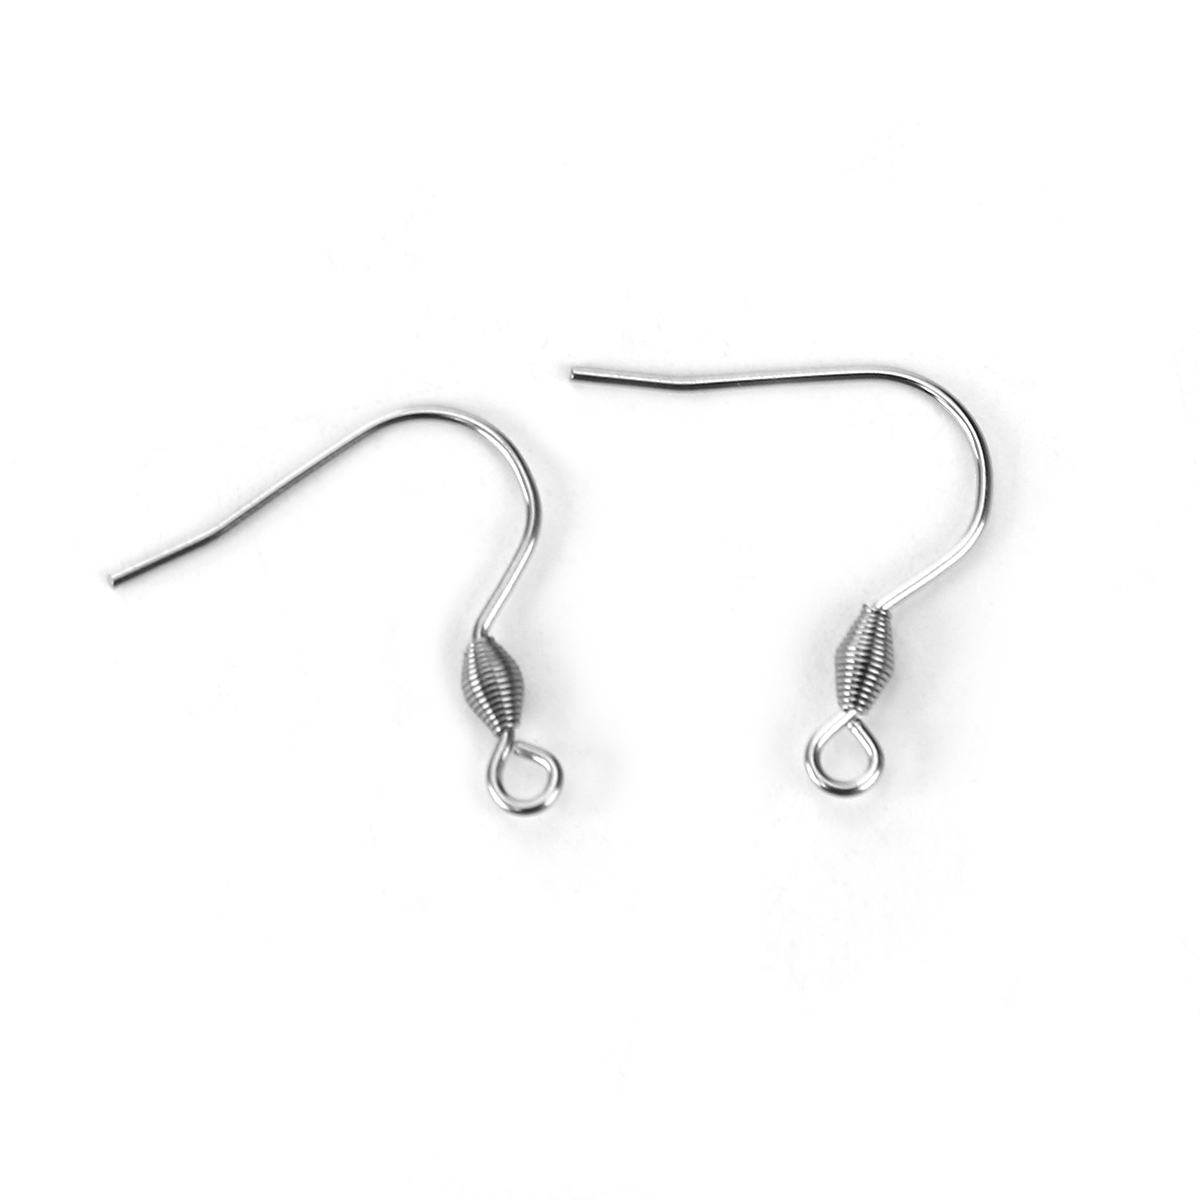 Picture of Stainless Steel Ear Wire Hooks Earring Findings Silver Tone W/ Loop 21mm( 7/8") x 21mm( 7/8"), Post/ Wire Size: (20 gauge), 30 PCs